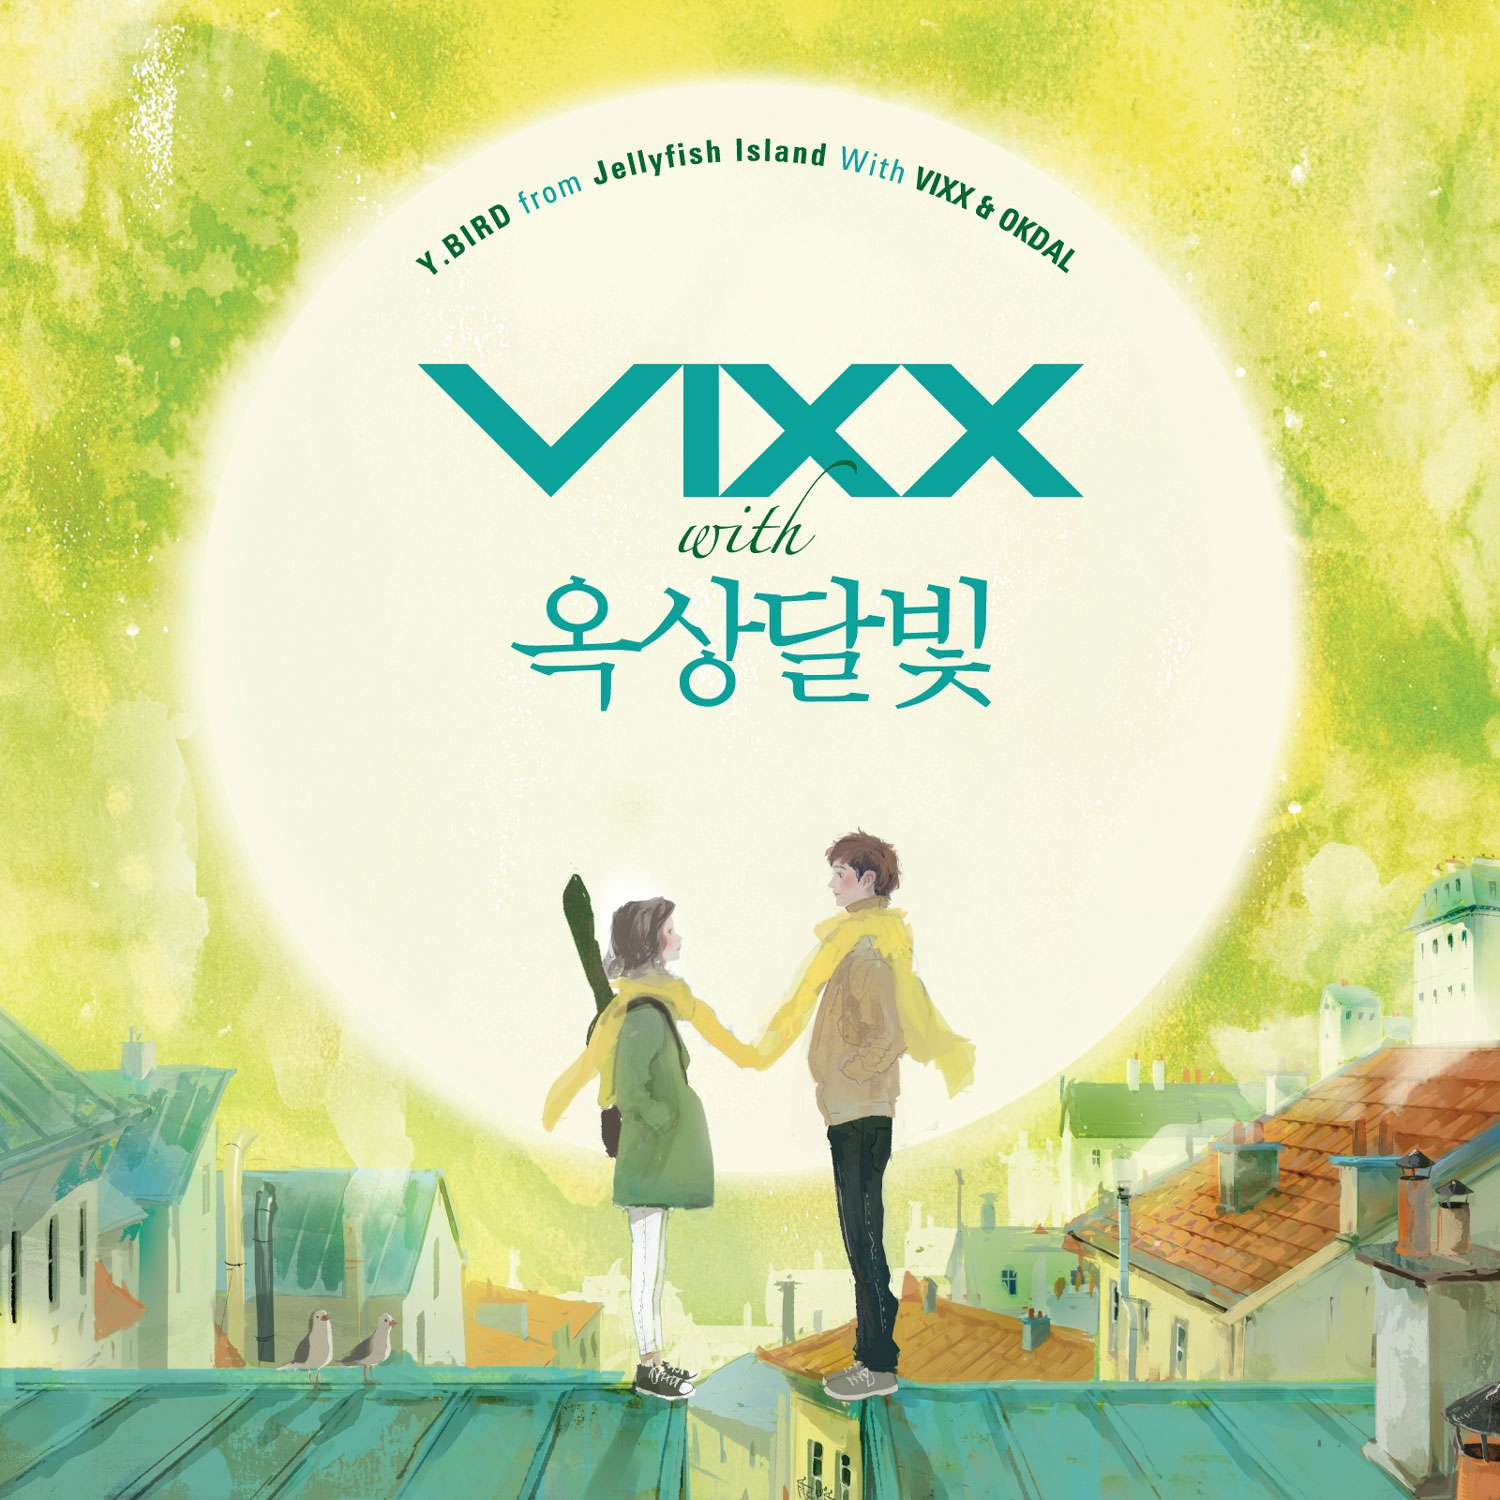 [Single] VIXX - Y.BIRD From Jellyfish Island With VIXX & OKDAL